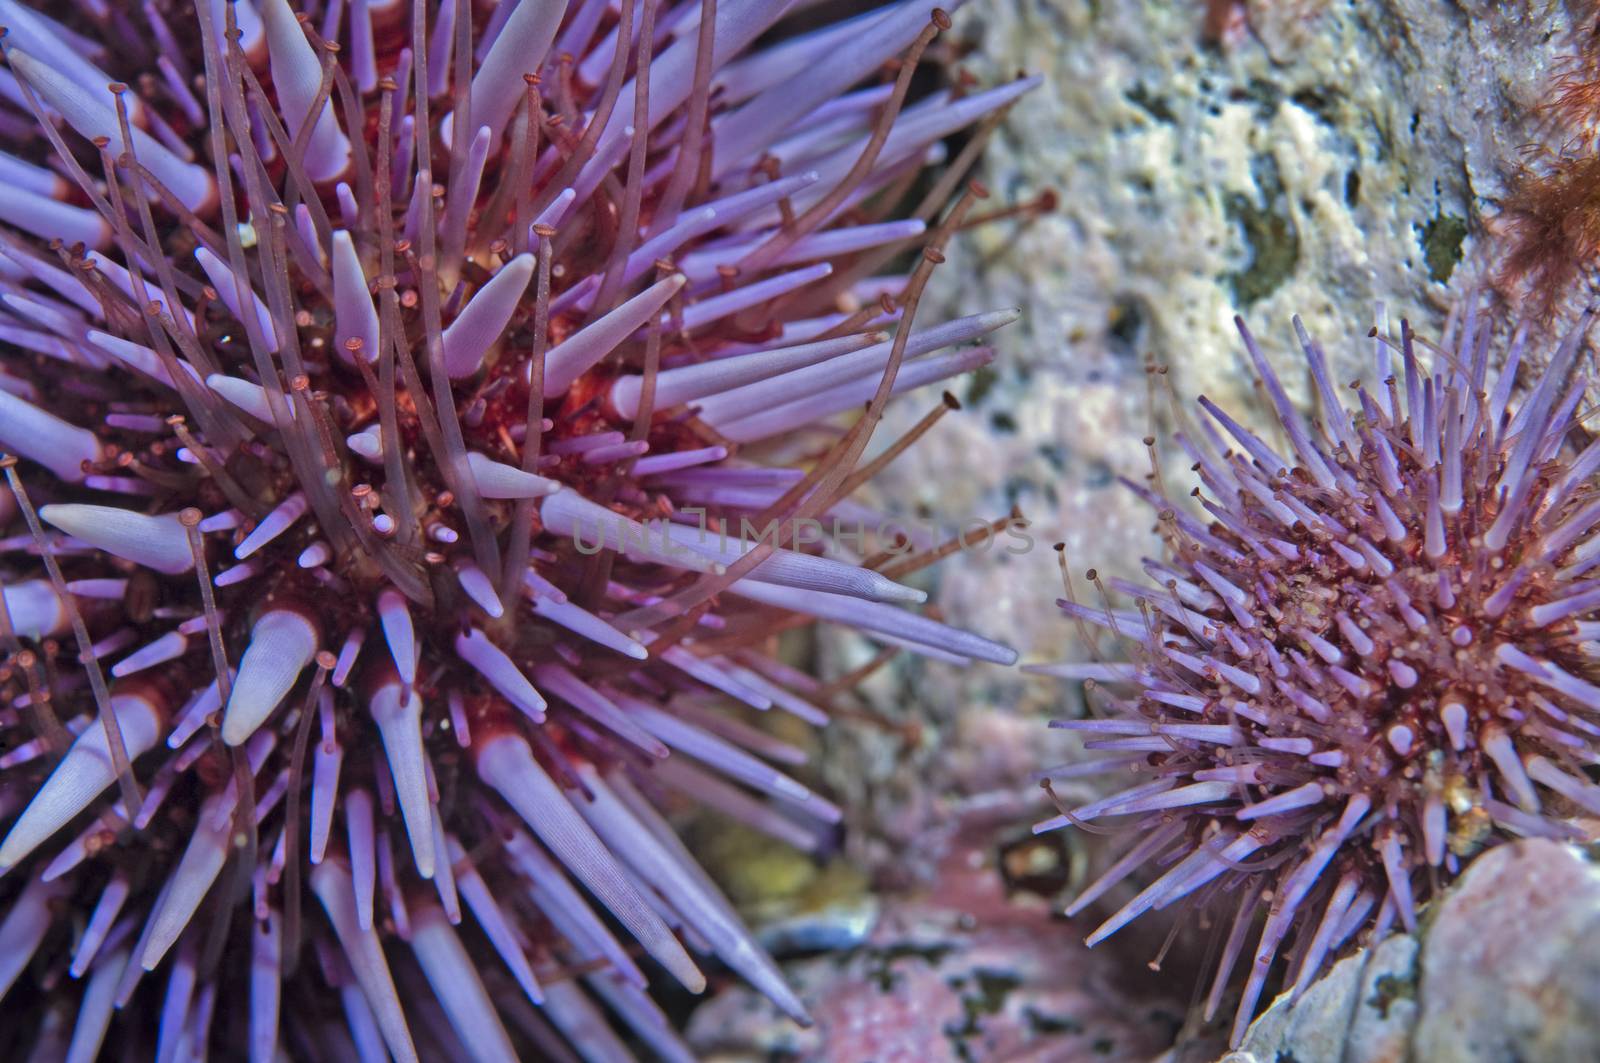 Purple Sea Urchin (Strongylocentrotus purpuratus) by Njean